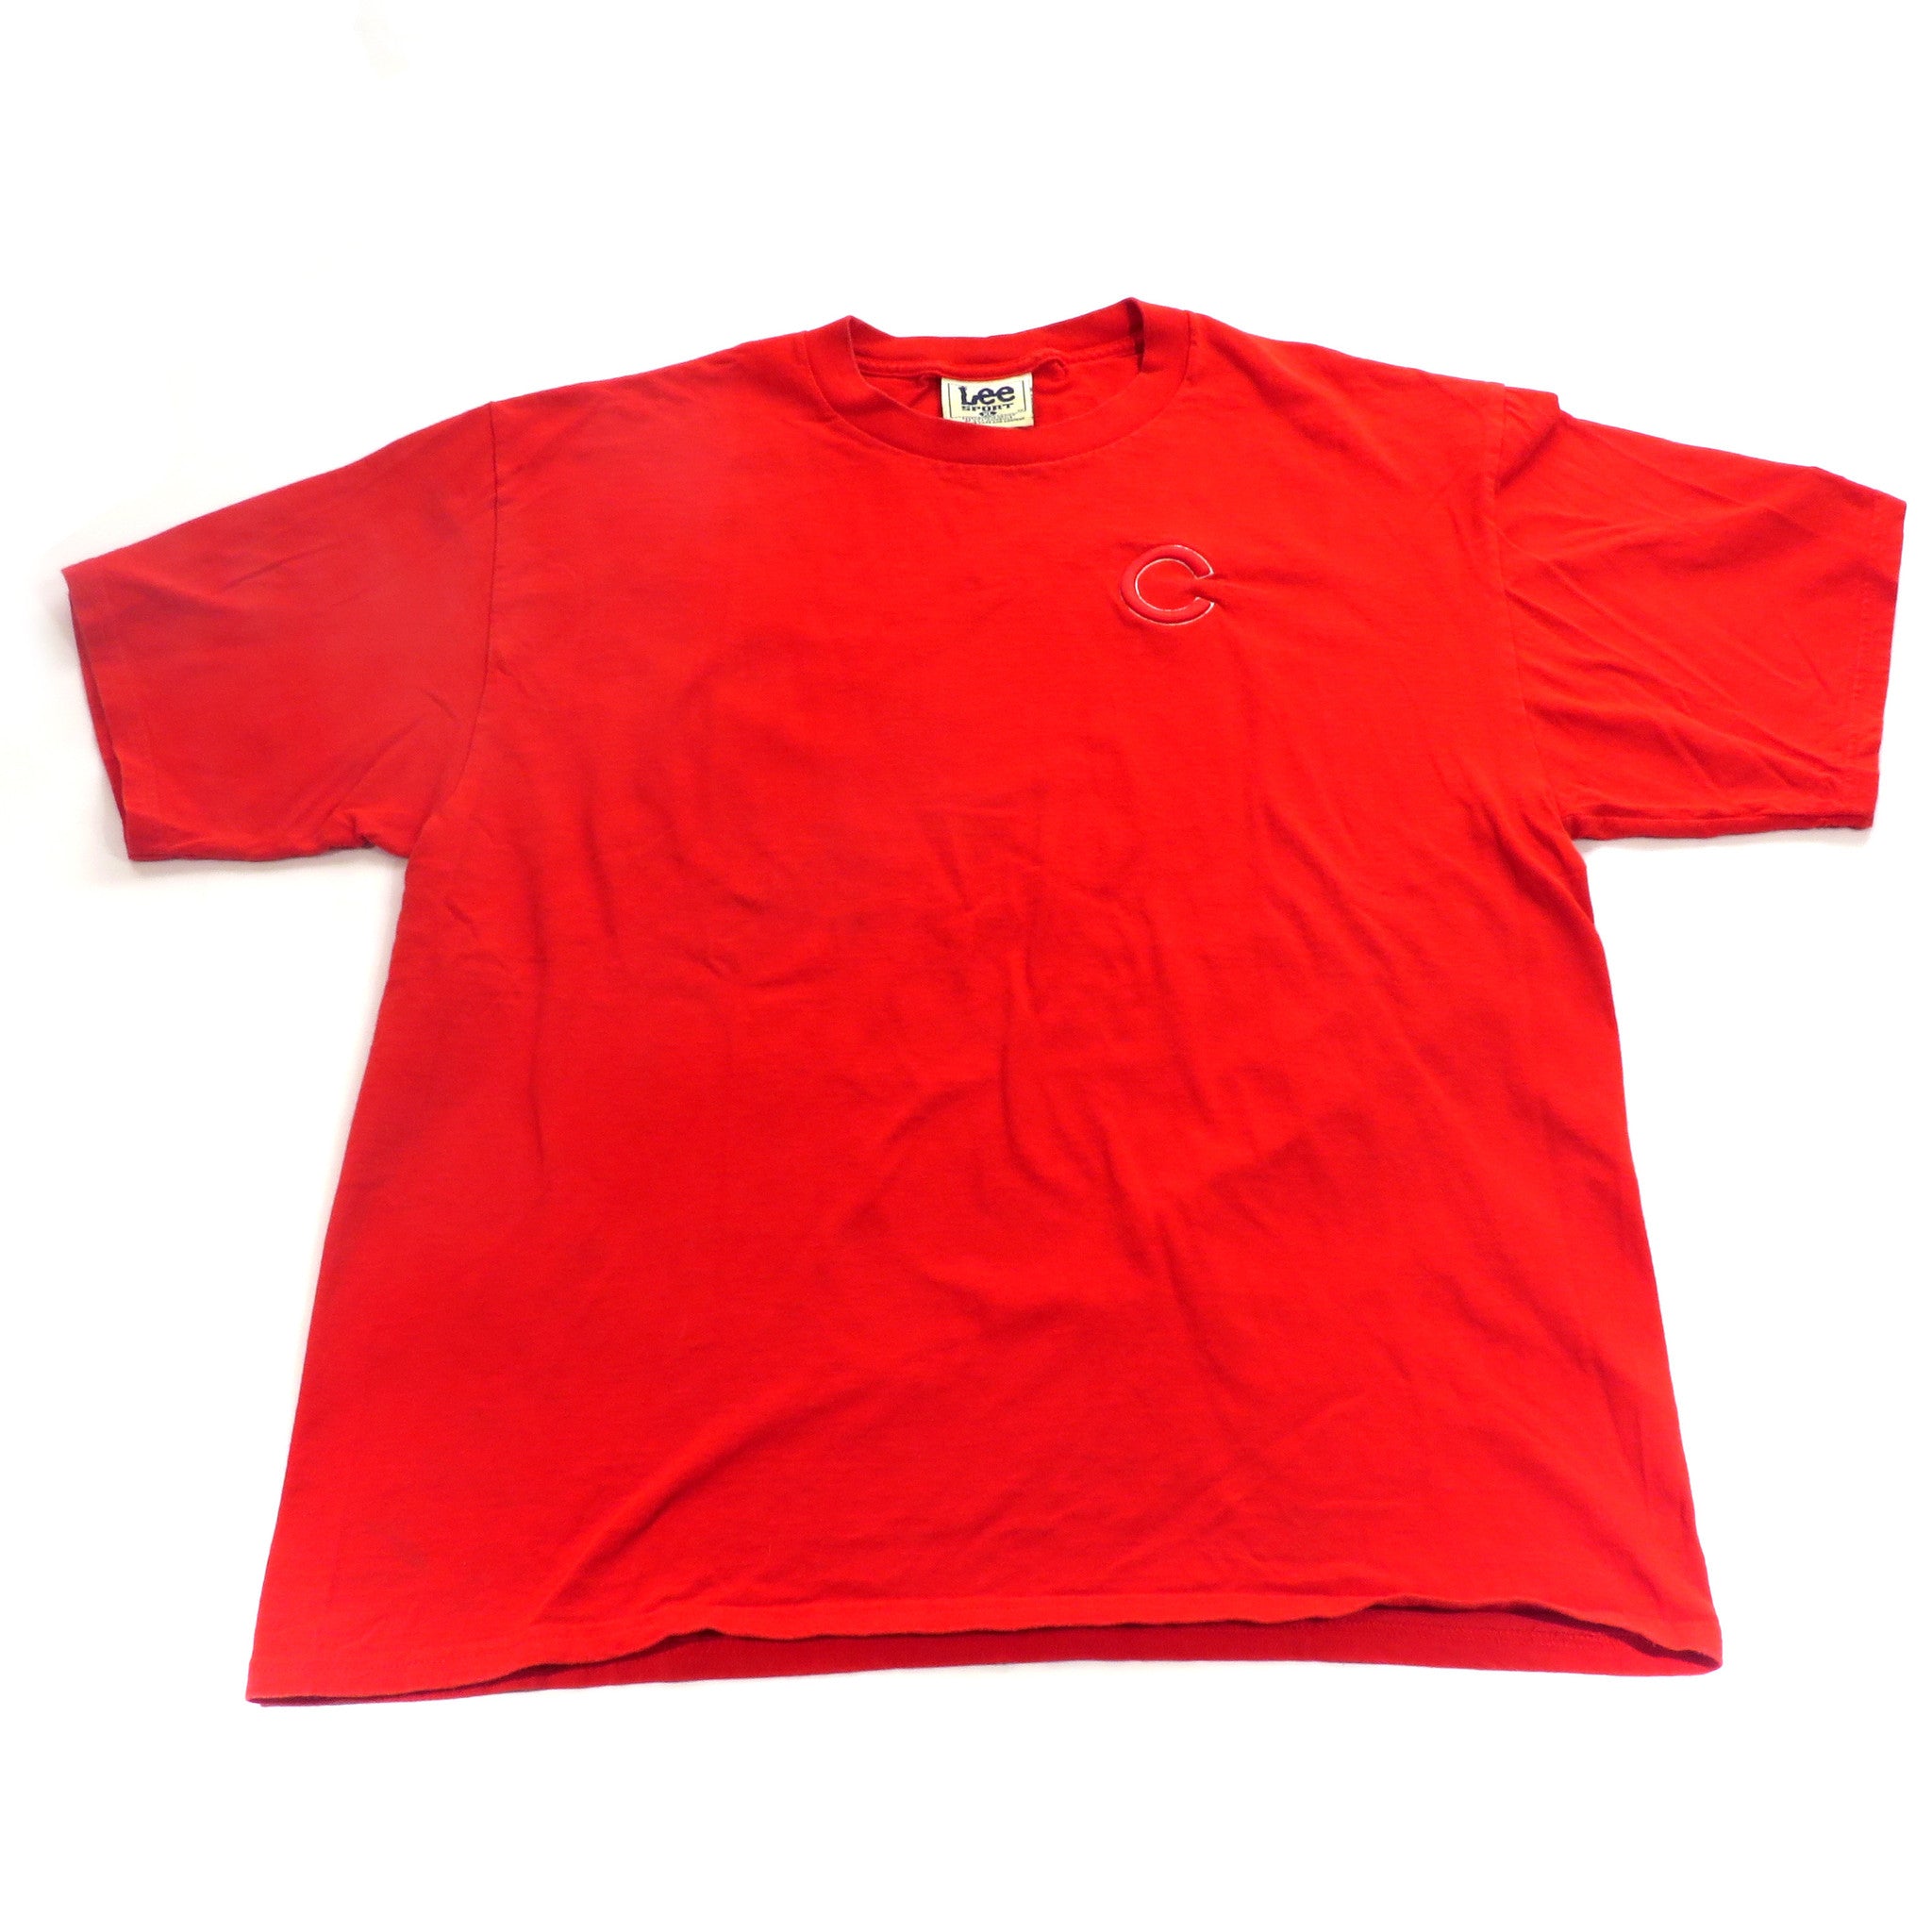 Vintage Cincinnati Reds T-Shirt